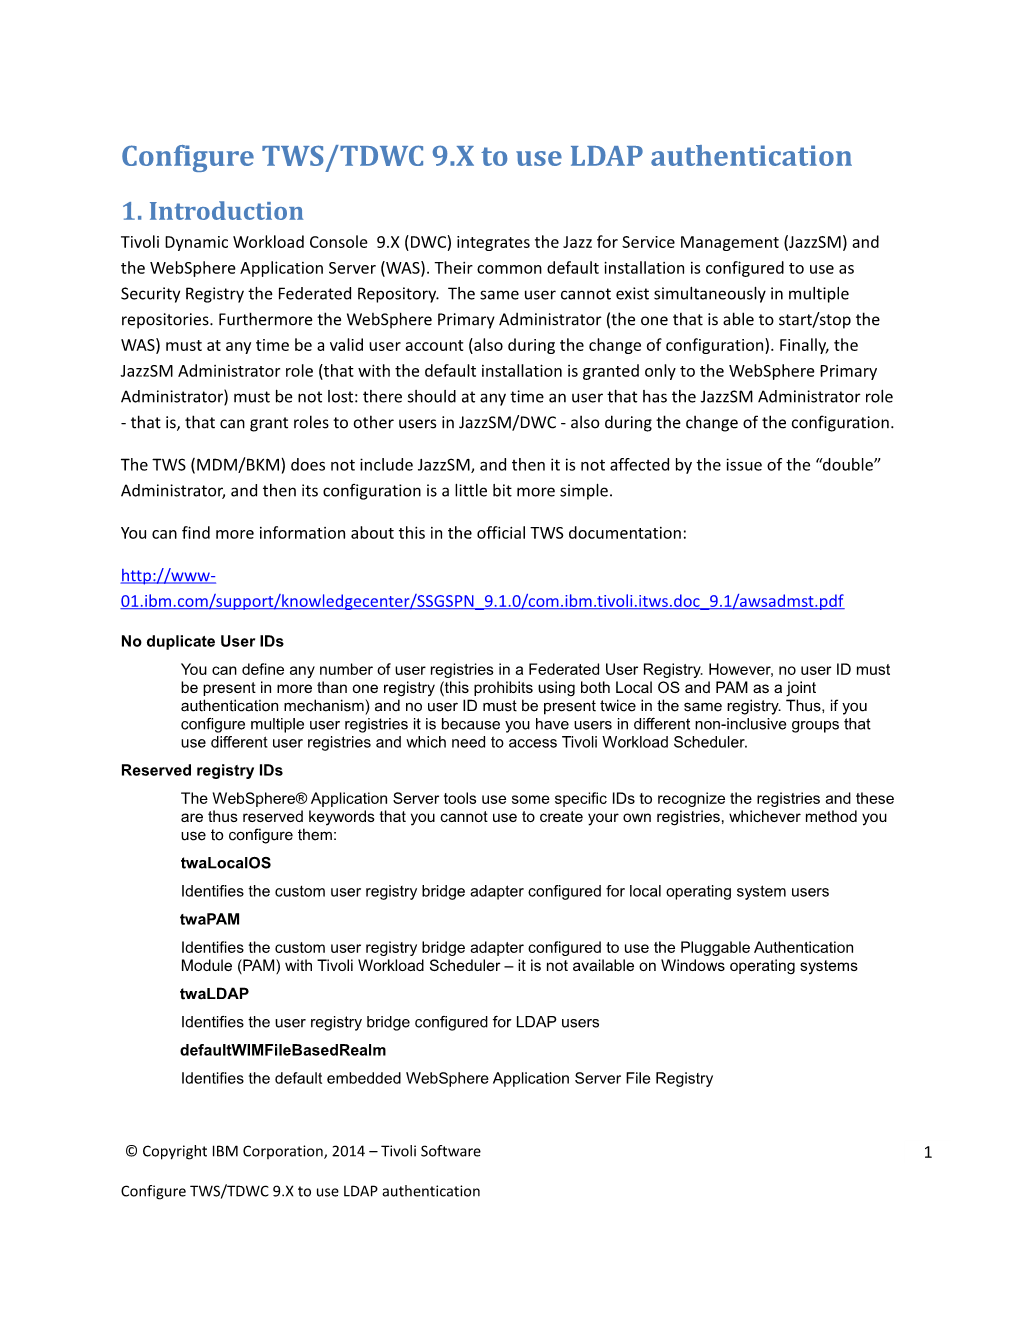 Configure TWS/TDWC 9.X to Use LDAP Authentication